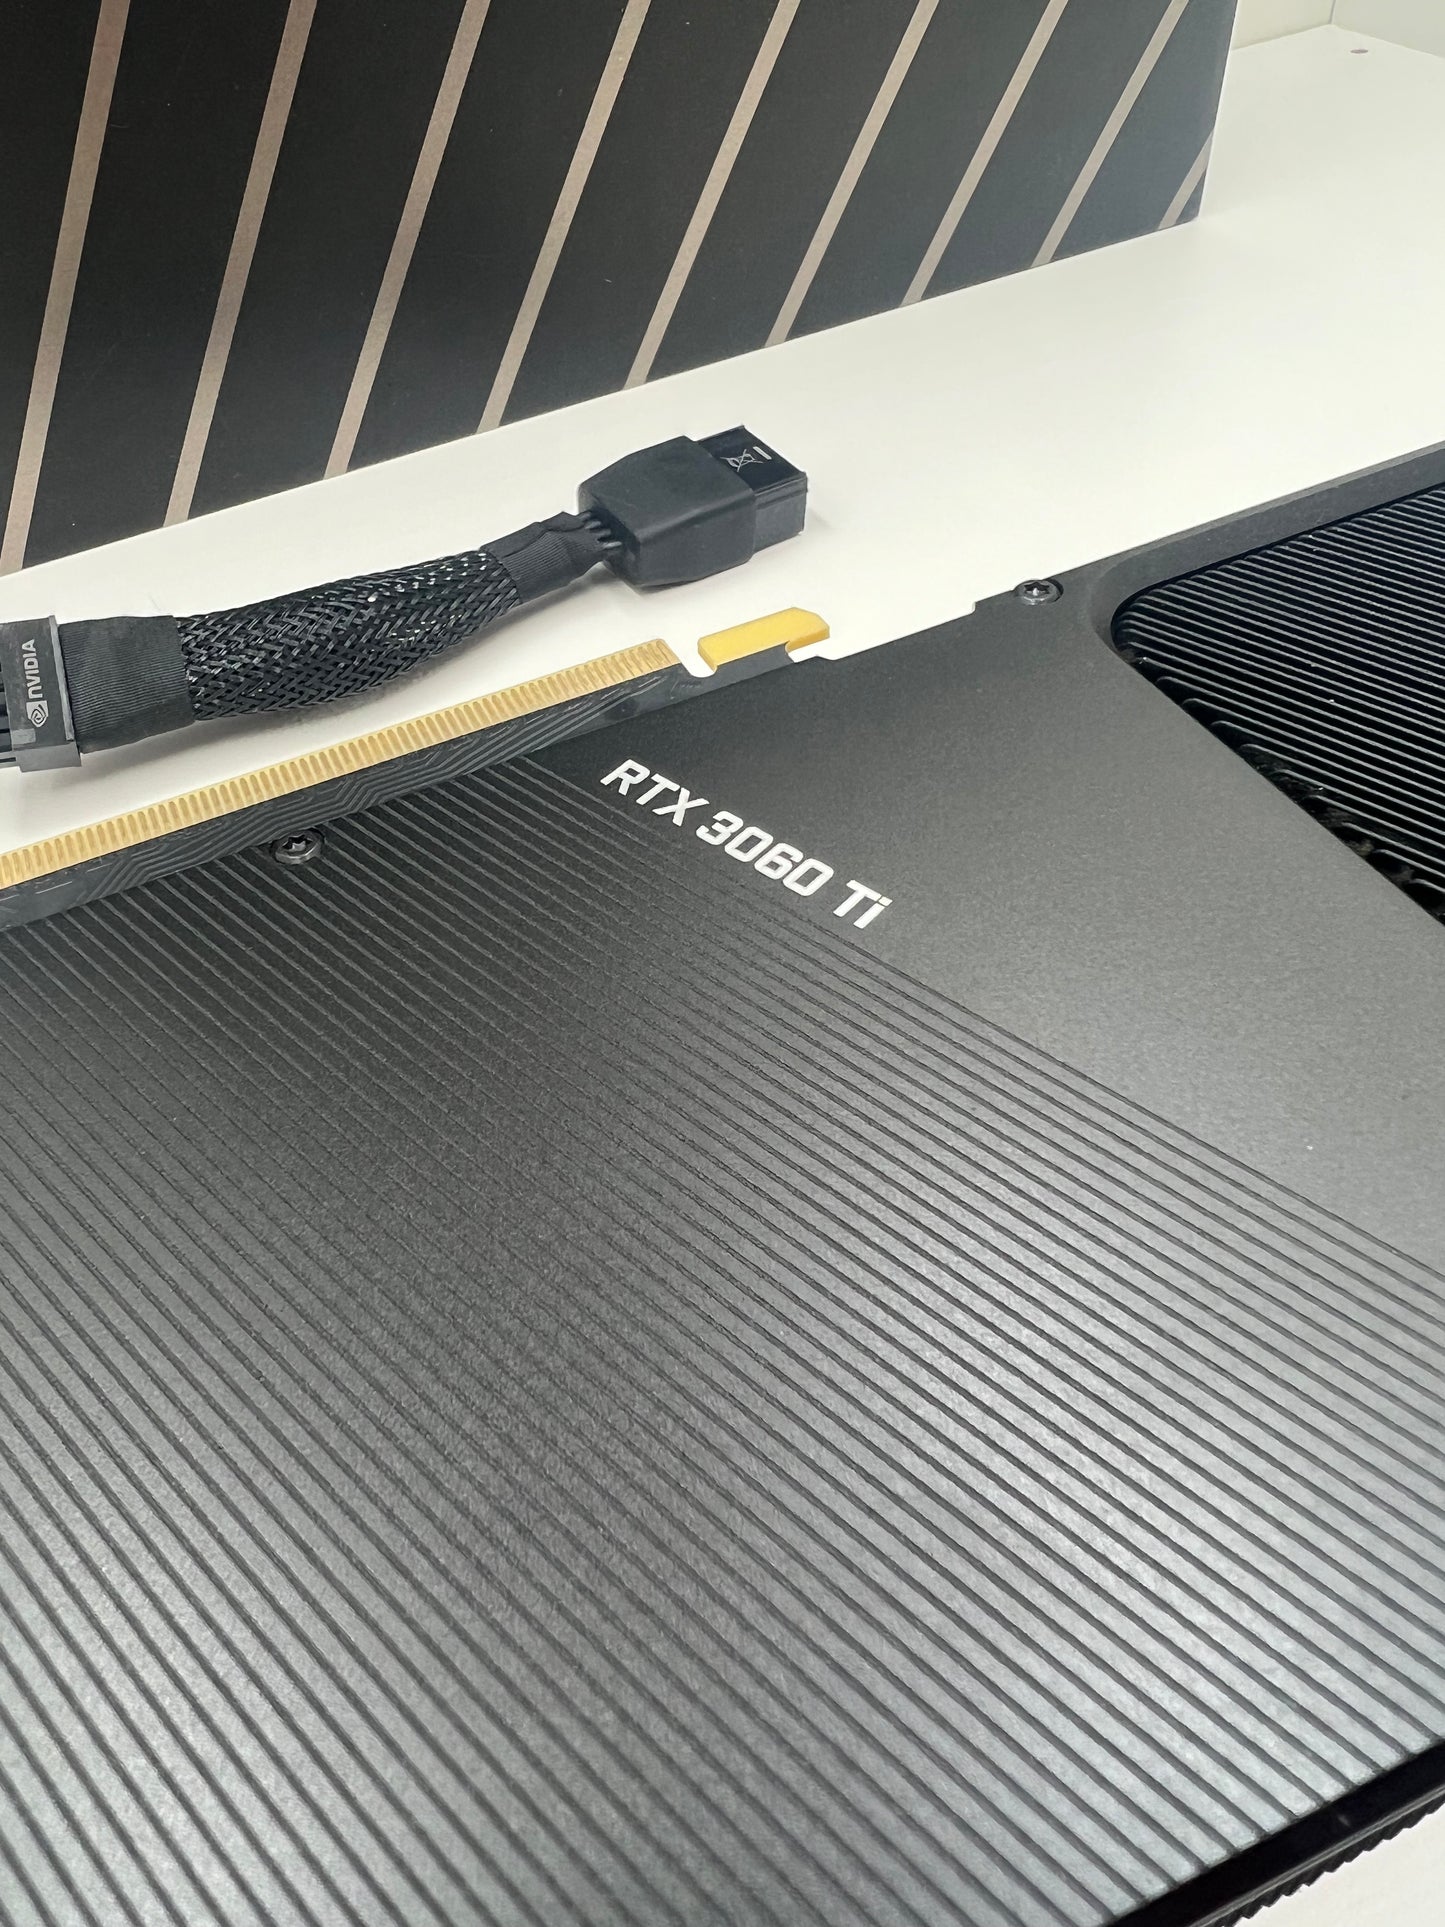 Nvidia GeForce RTX 3060 Ti Founders Edition 8GB GDDR6 - A